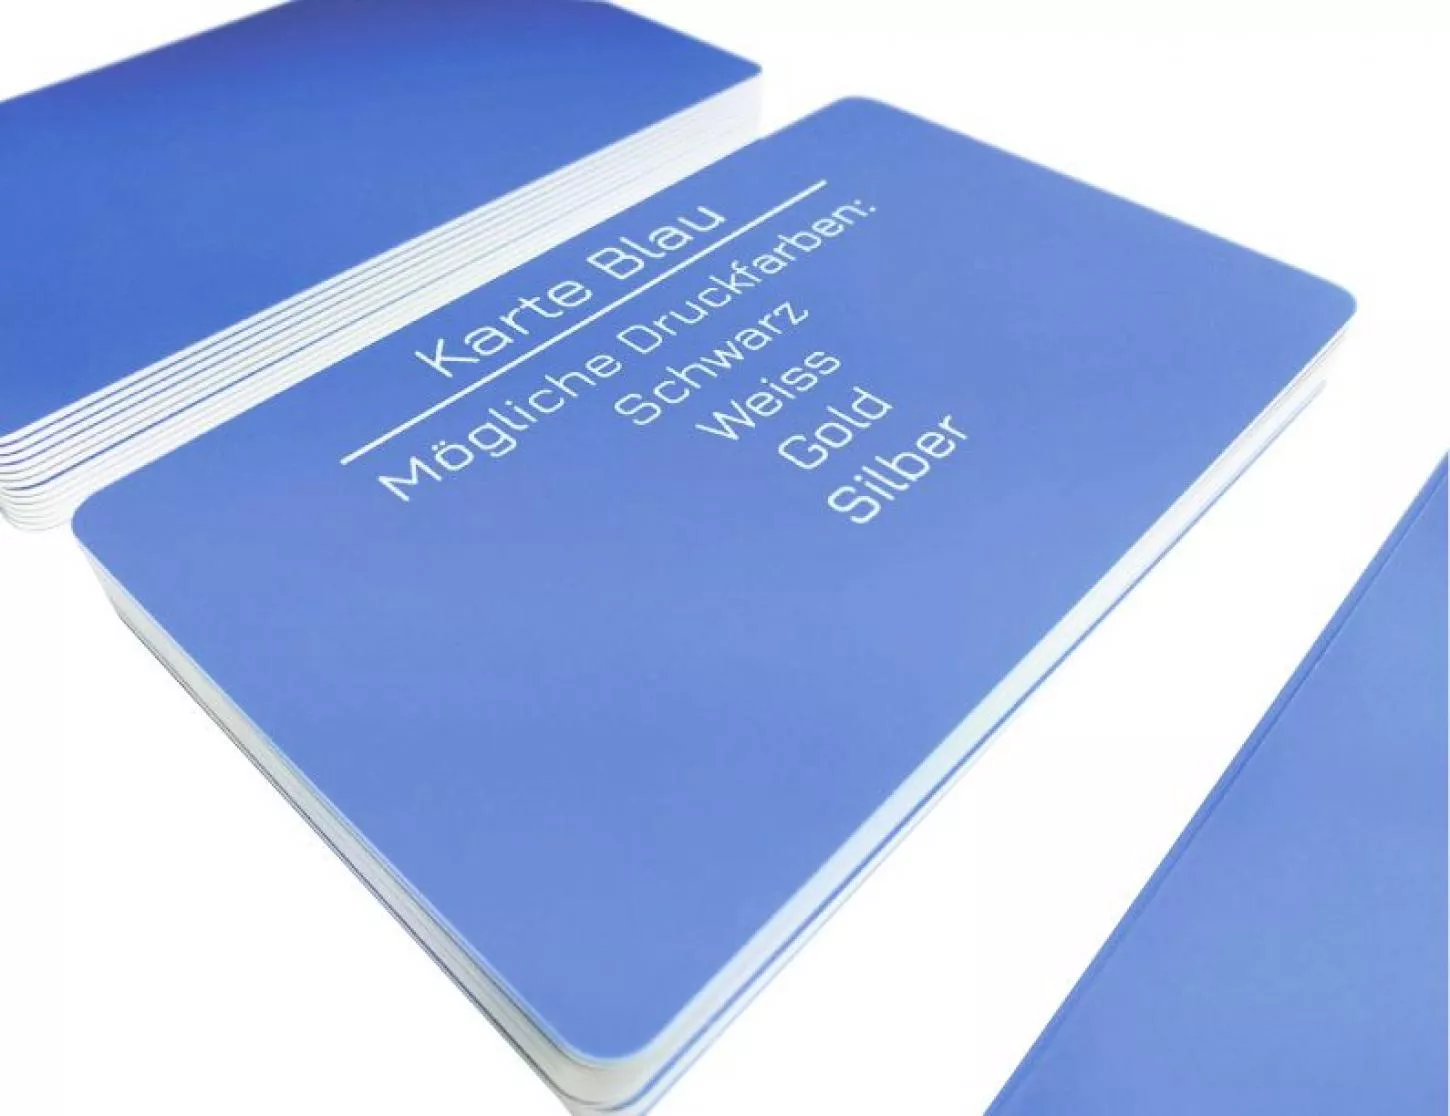 Plastic card blue with signature panel